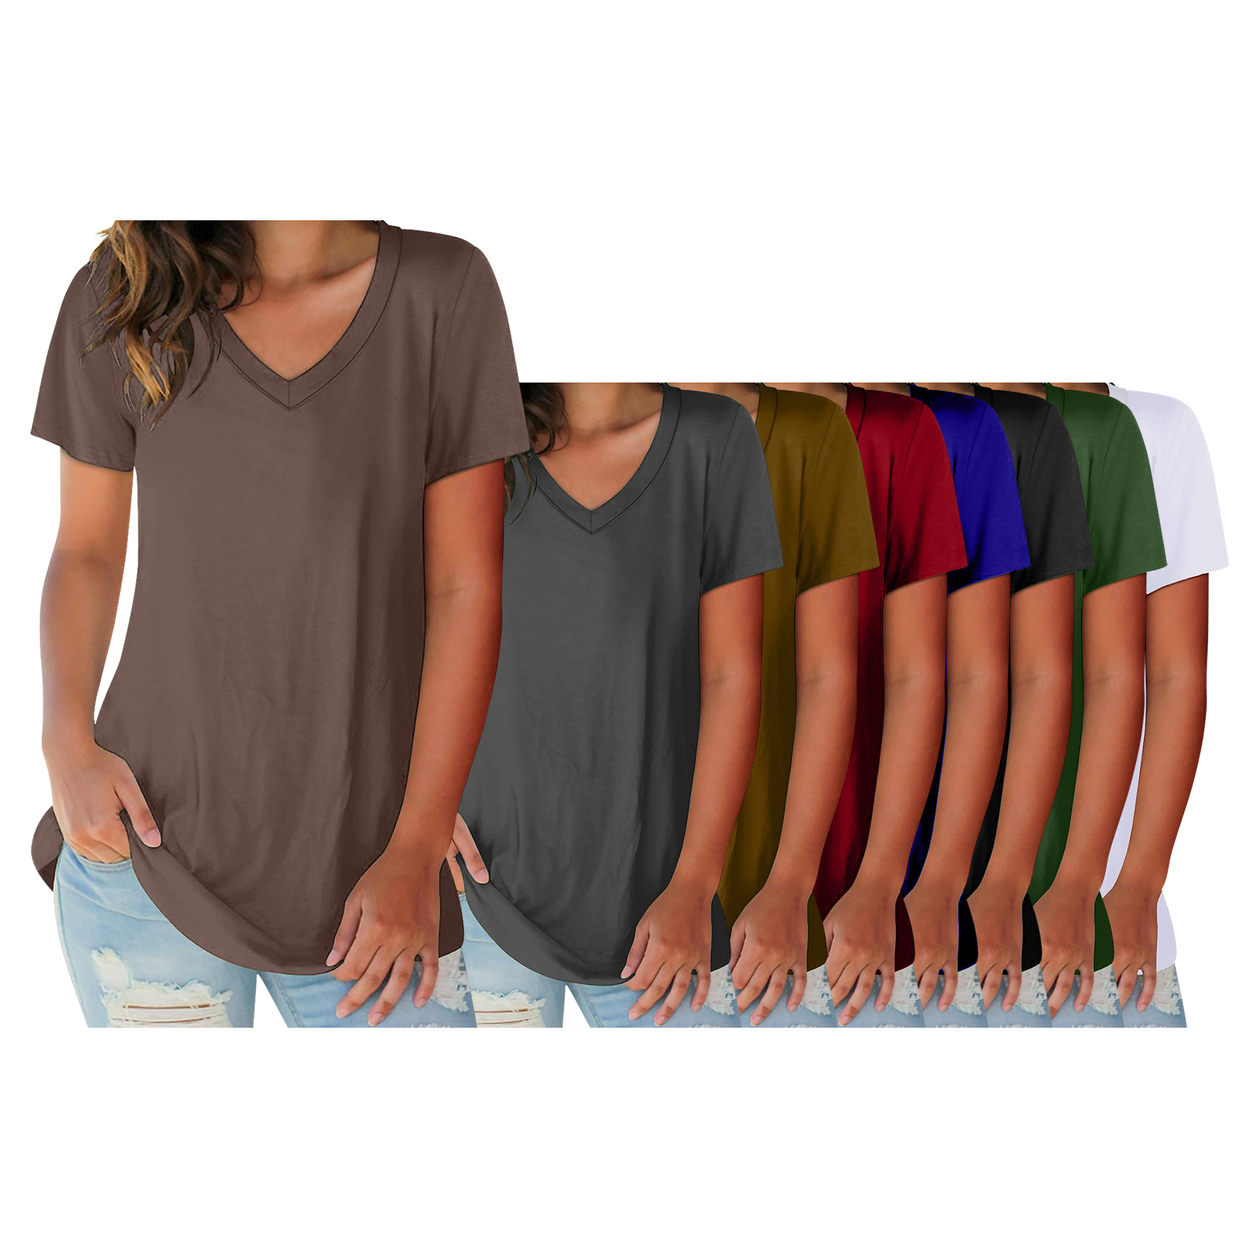 3-Pack: Women's Ultra Soft Smooth Cotton Blend Basic V-Neck Short Sleeve Shirts - Black, Grey Mustard, X-large